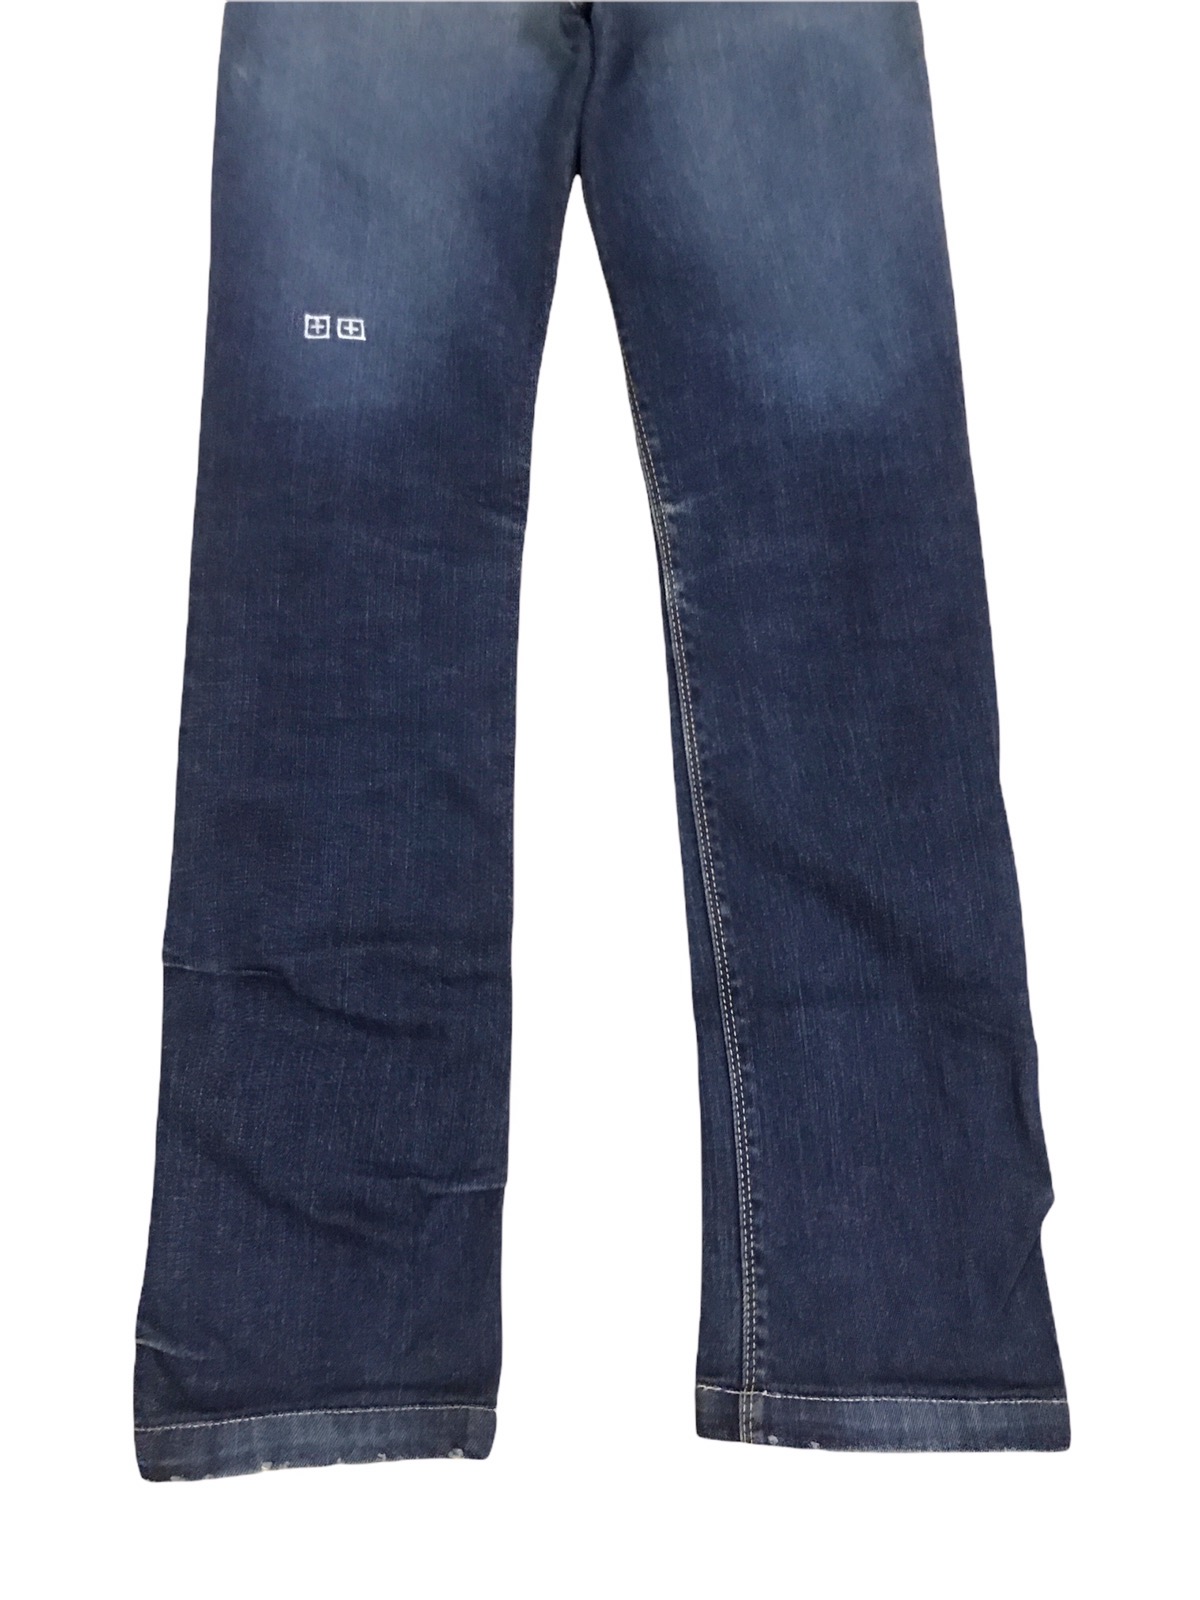 Ksubi Distressed Jeans - 7